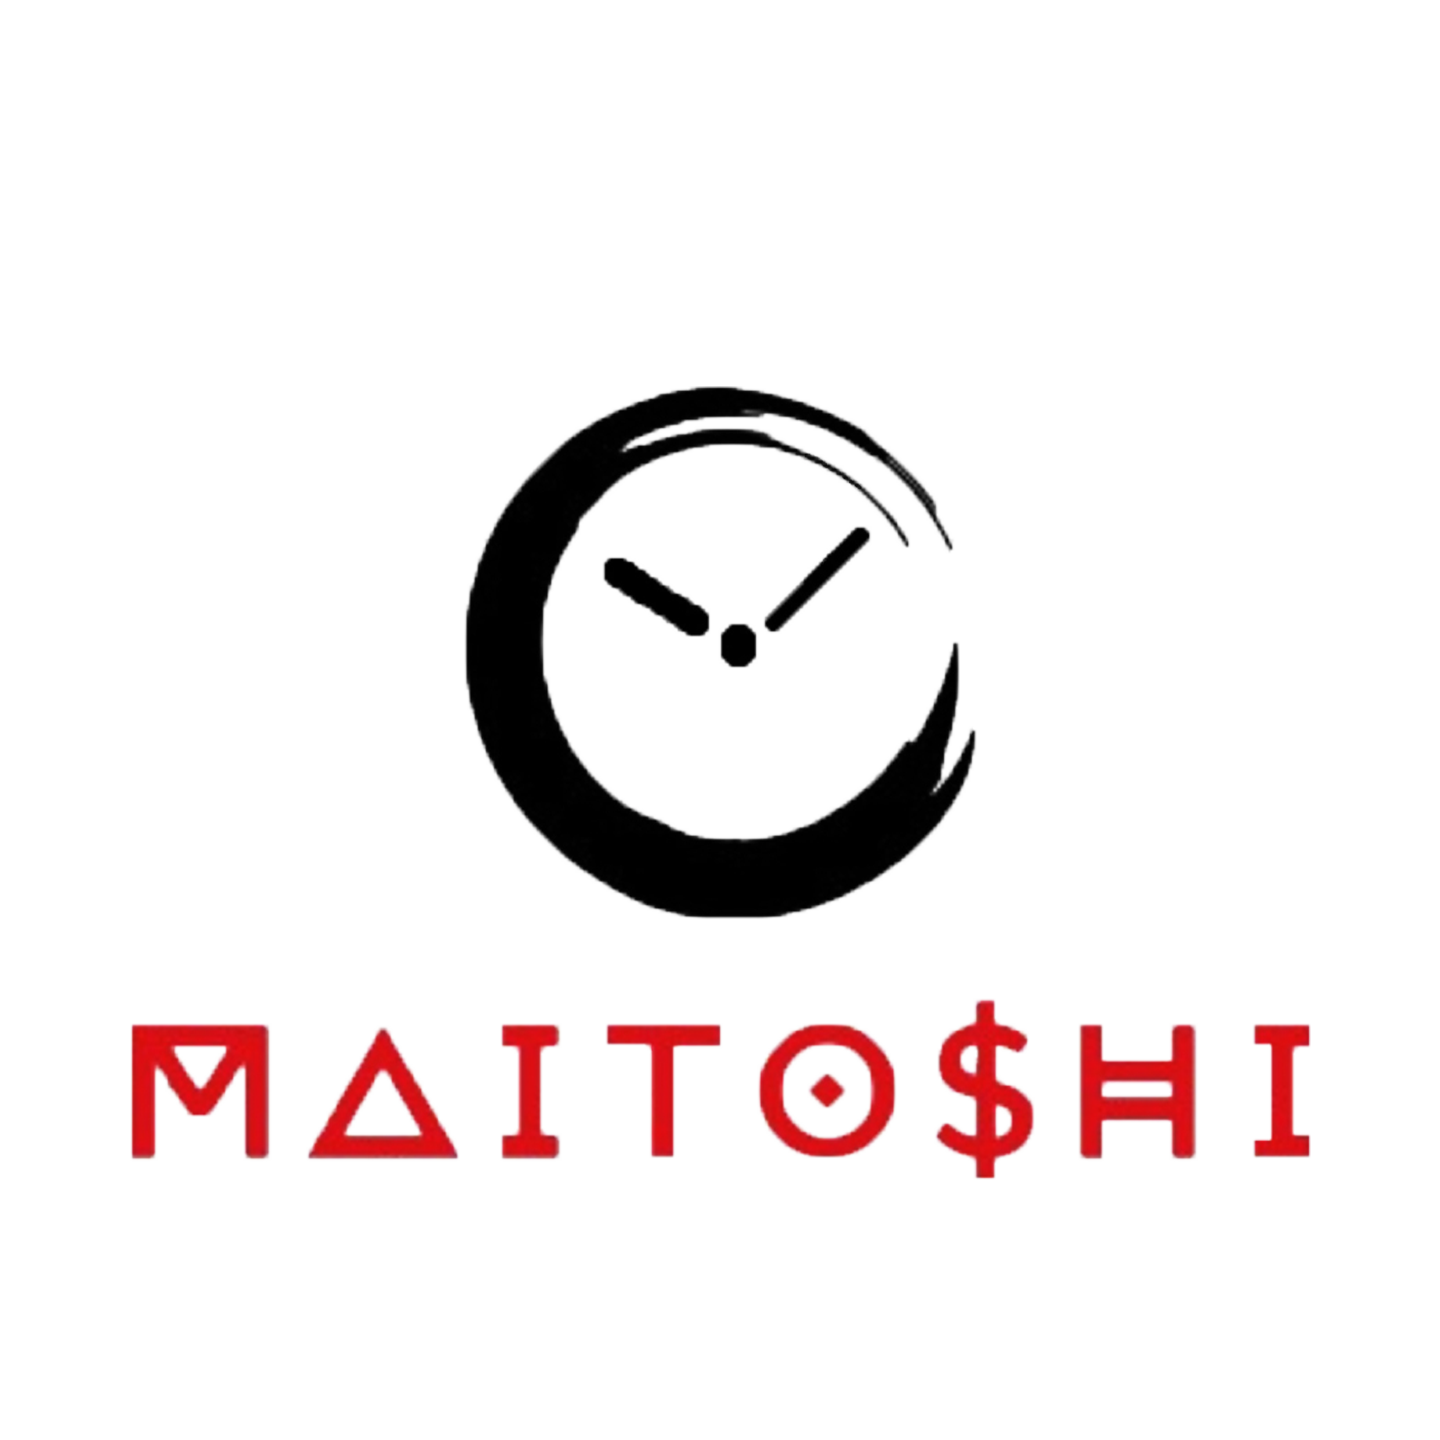 Maitoshi